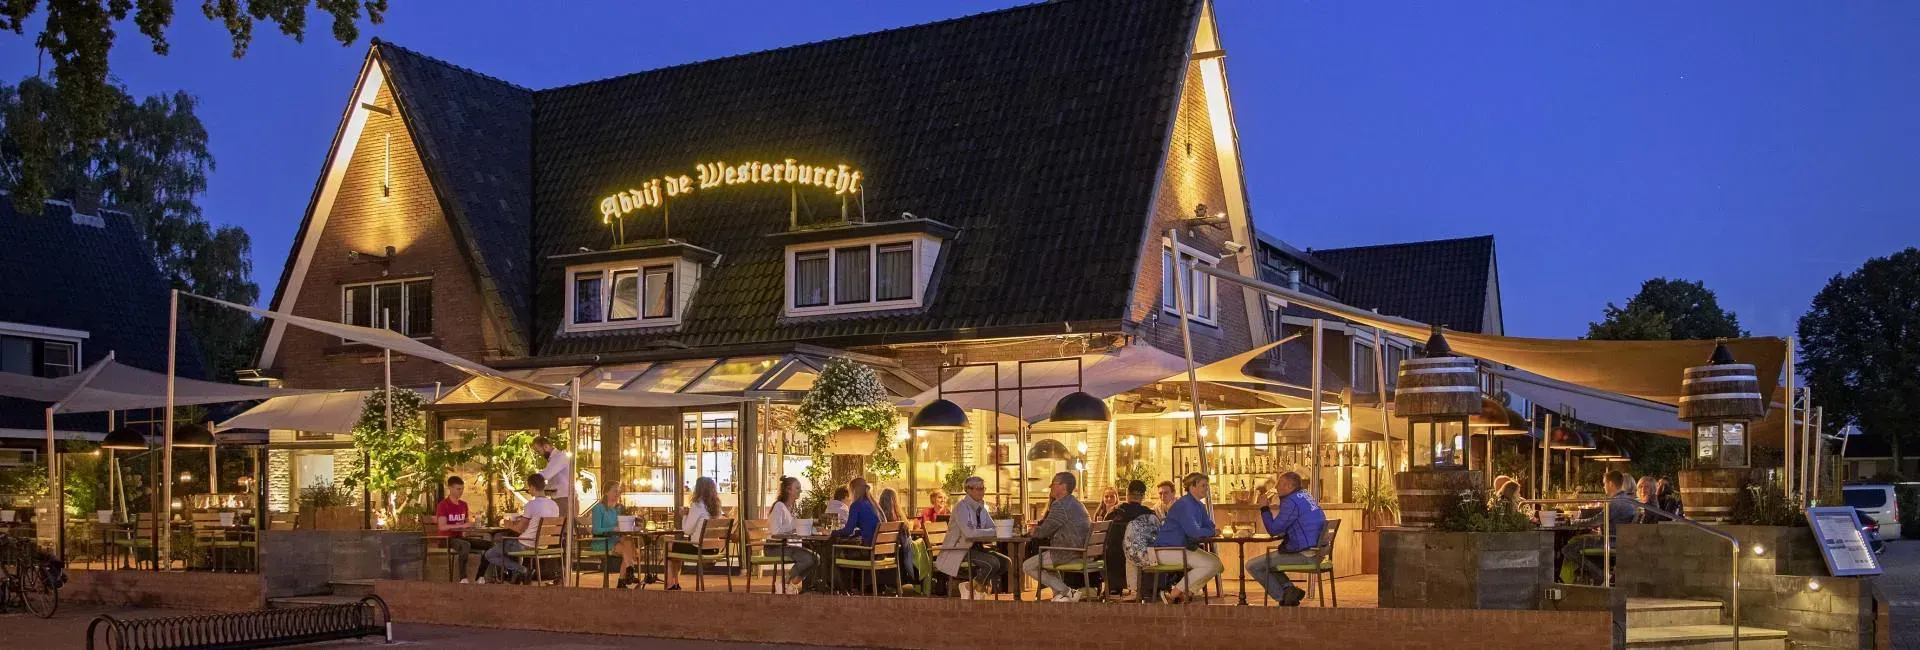 Hotel & Restaurant in Westerbork